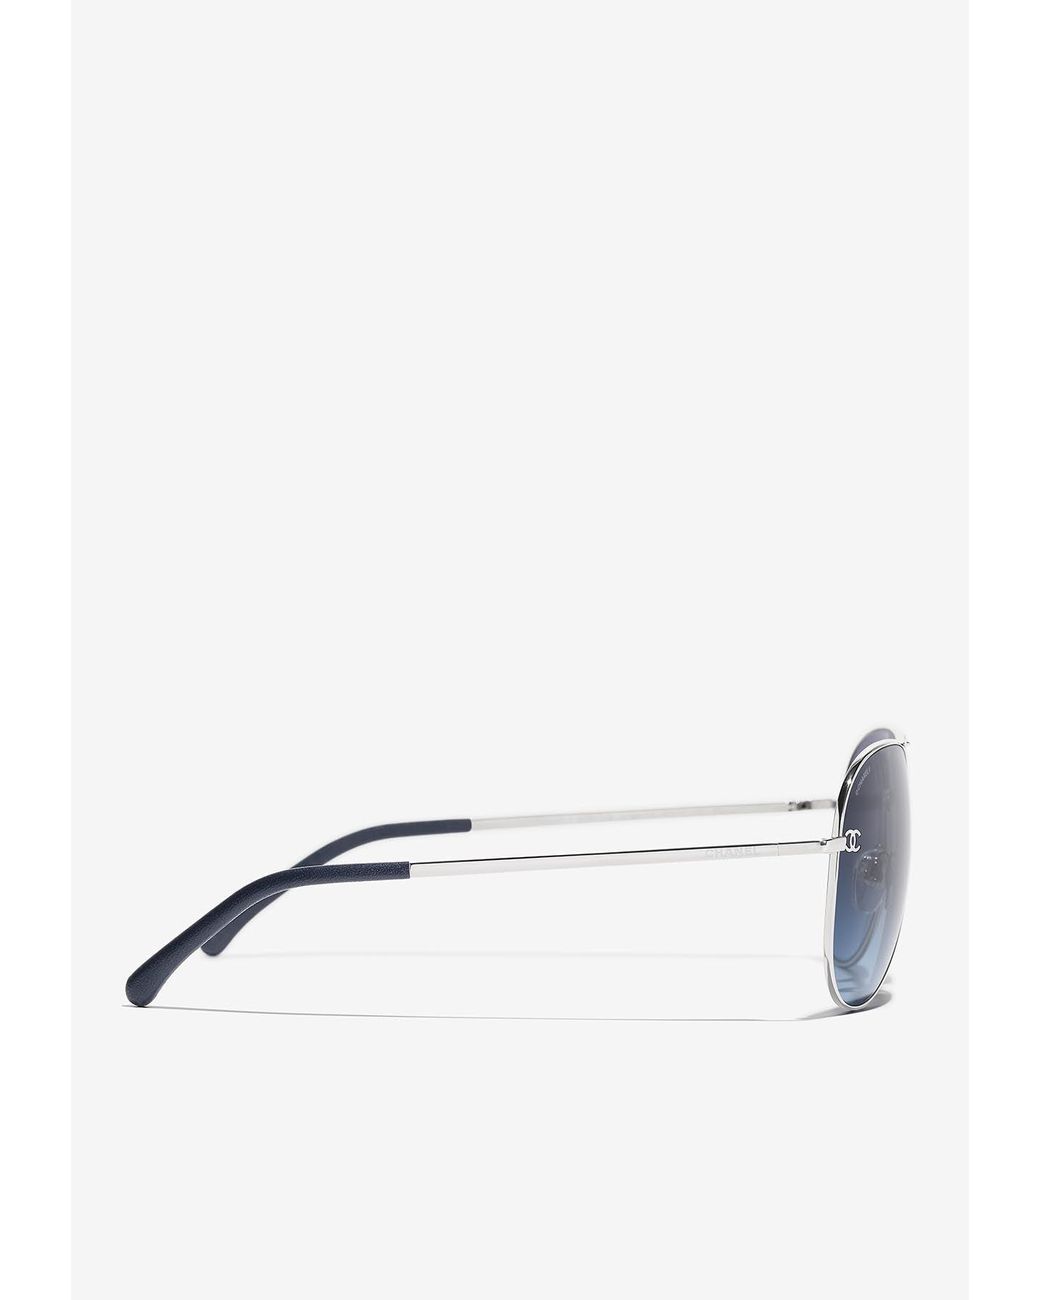 Chanel Logo Pilot Sunglasses in Blue